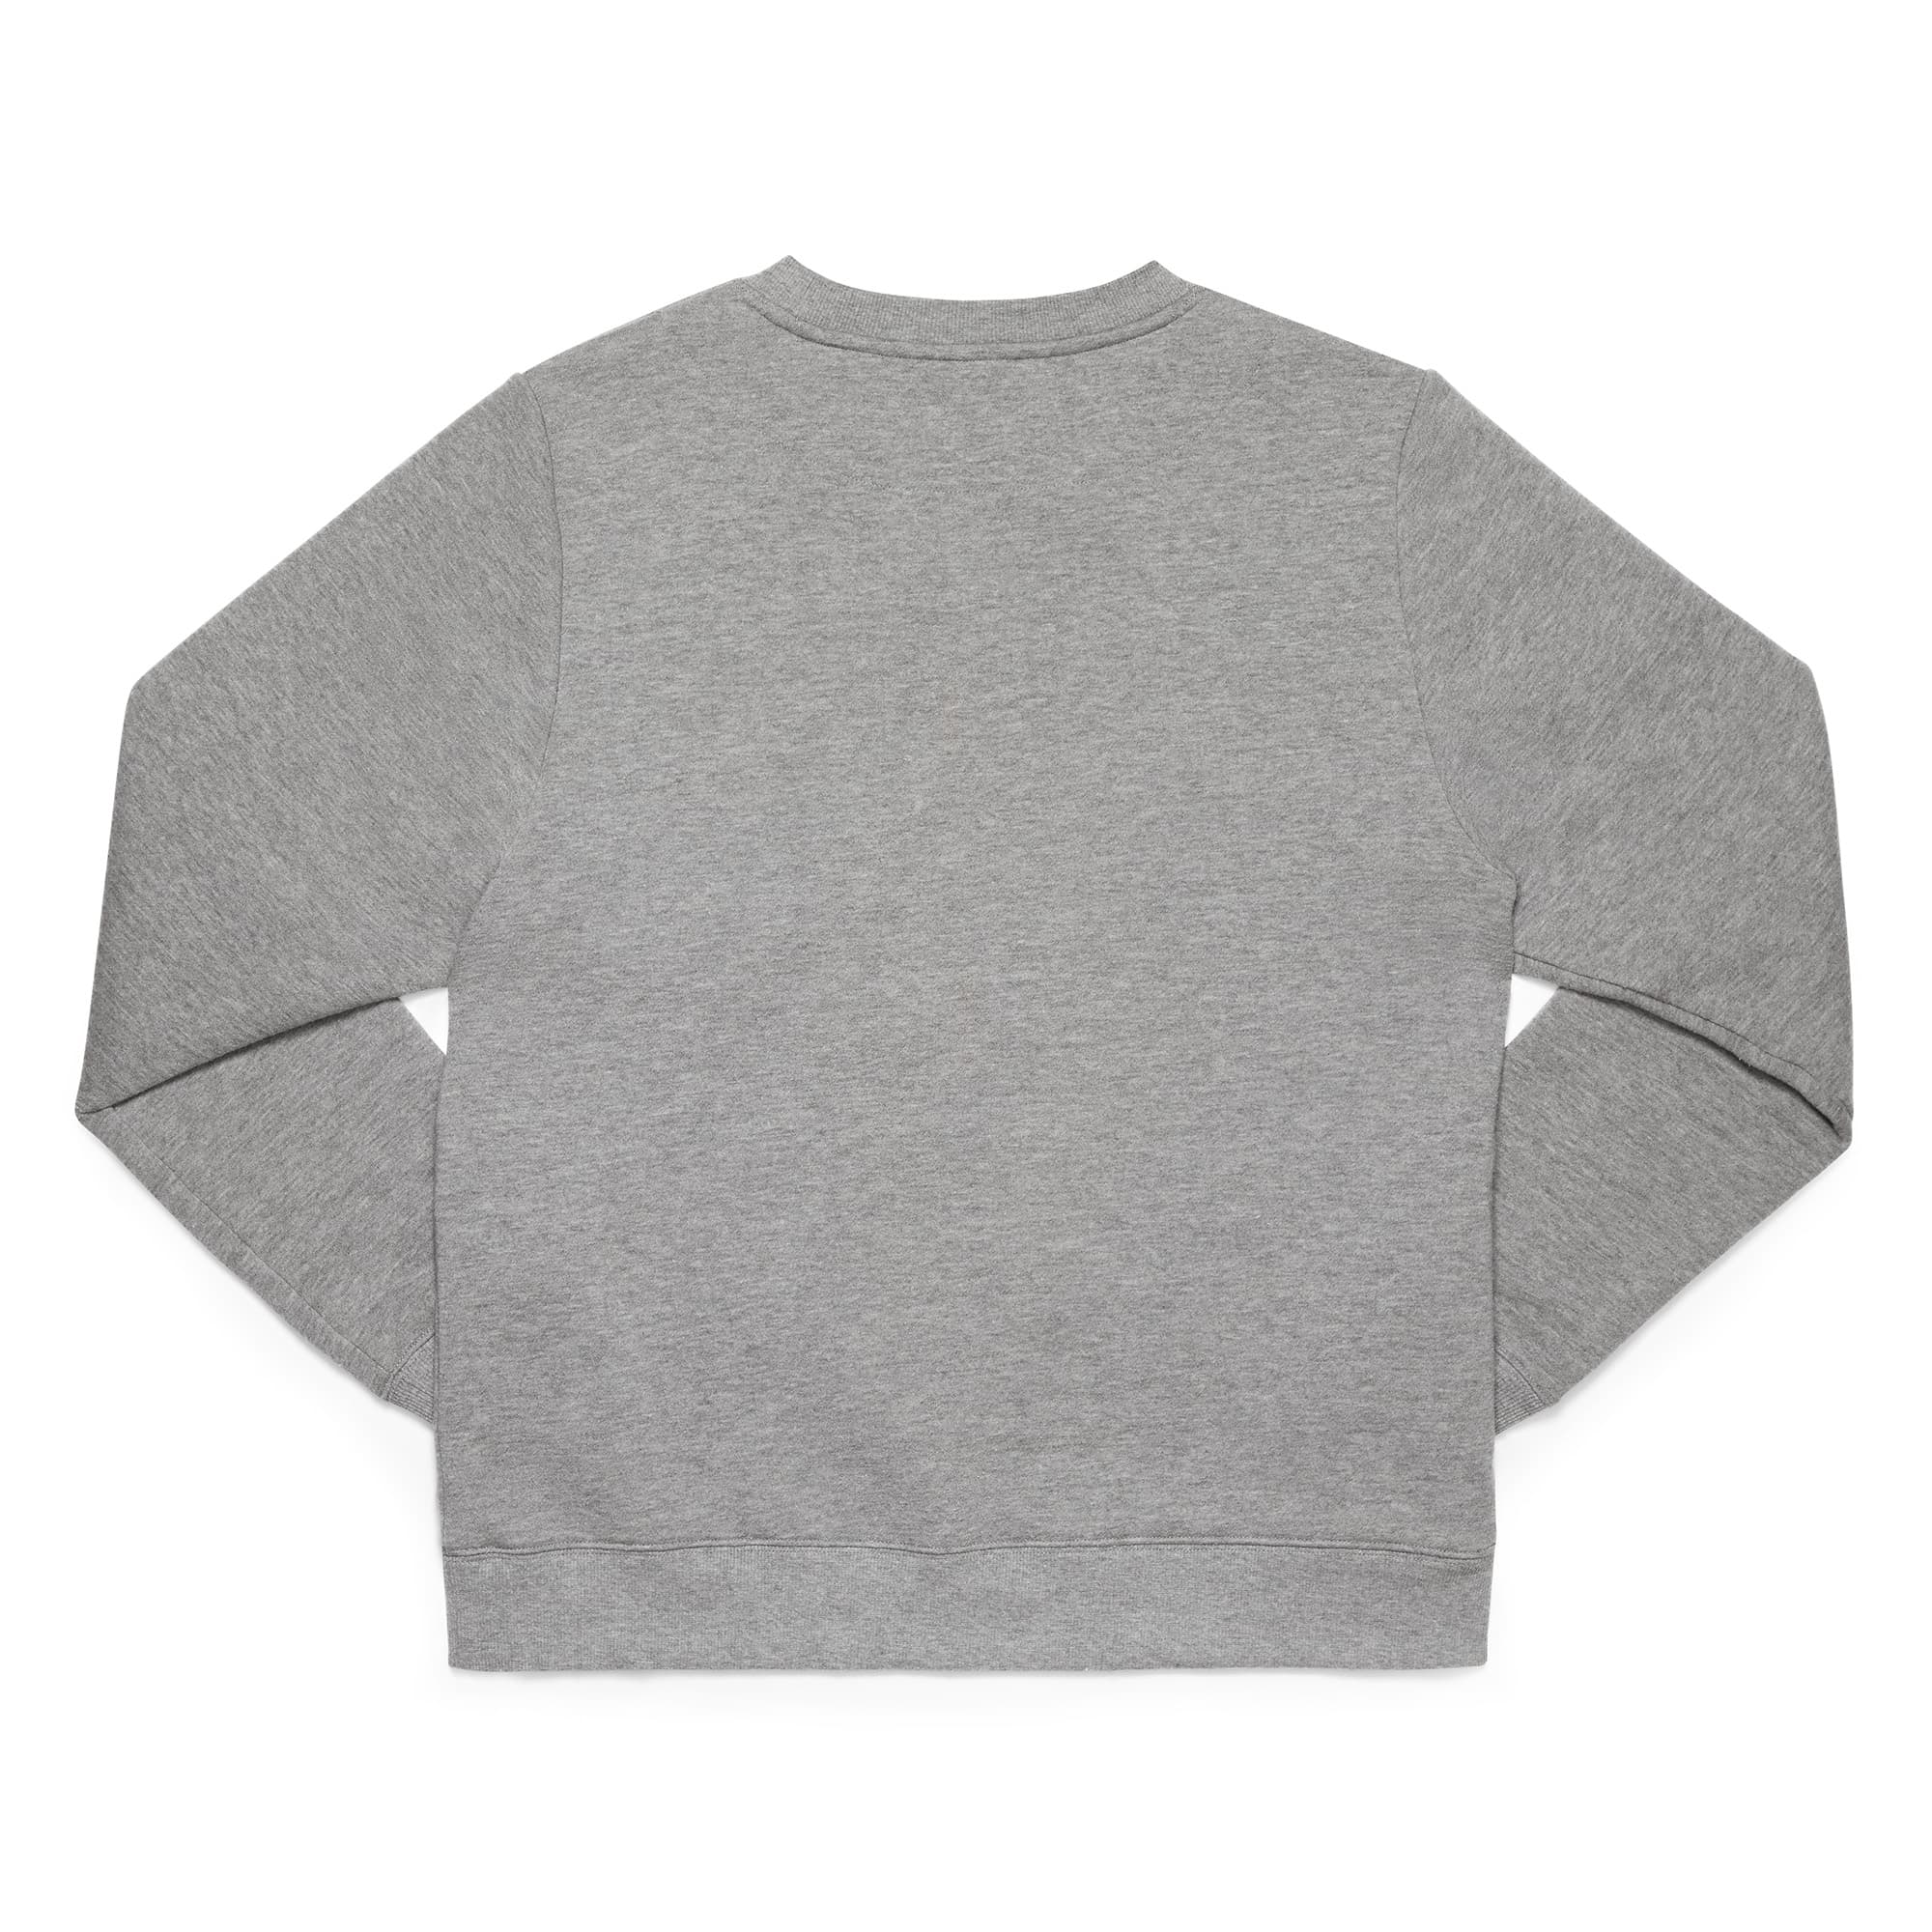 Grey fleece Crewneck Sweatshirt back view #color_castlerock heather